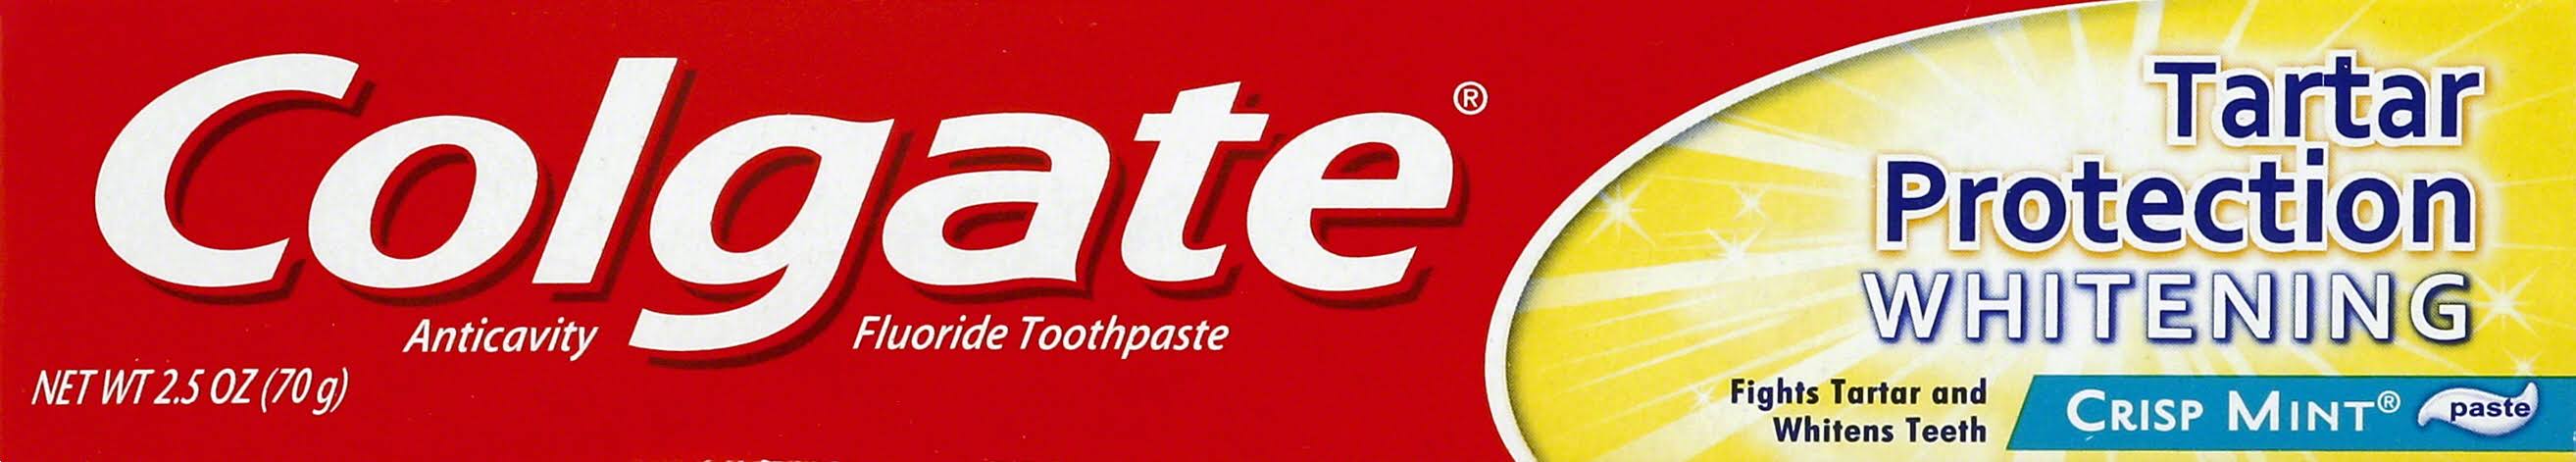 Colgate T-pasteTartar Control Whitening Crisp Mint - 2.5oz/24pack